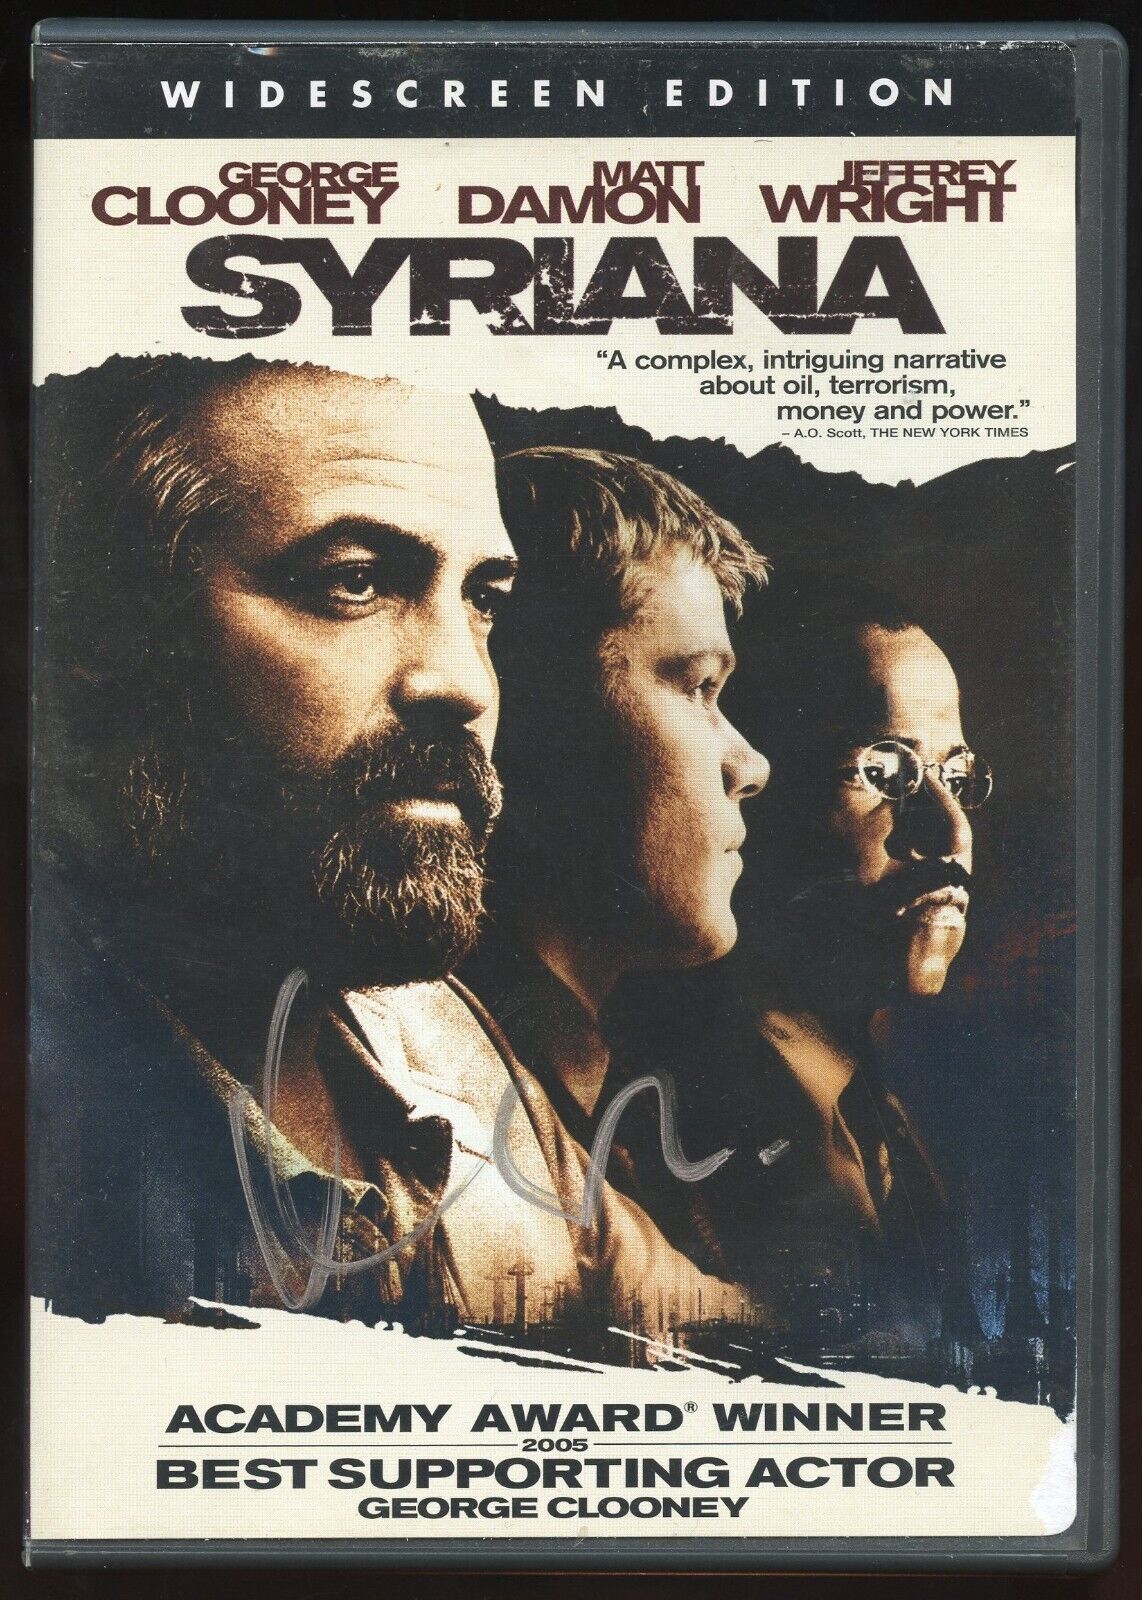 Matt Damon signed autograph auto Syriana Thriller DVD Video Discs JSA Stickered